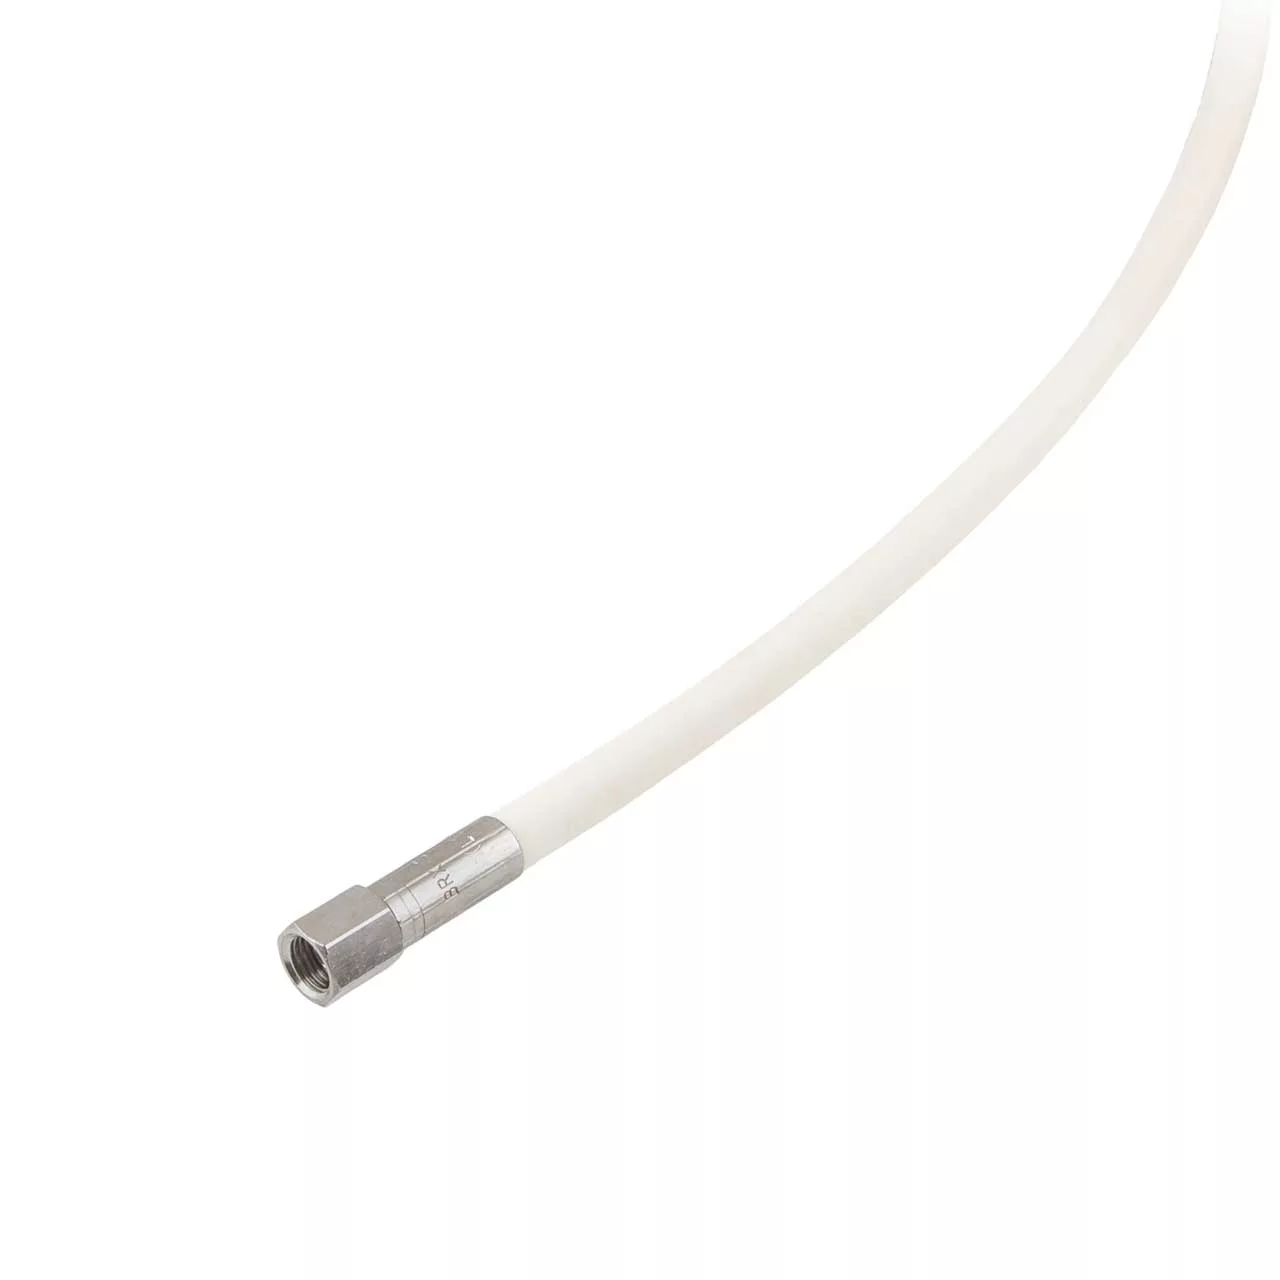 Tecline HP hose 0.8 m rubber white 14030-151